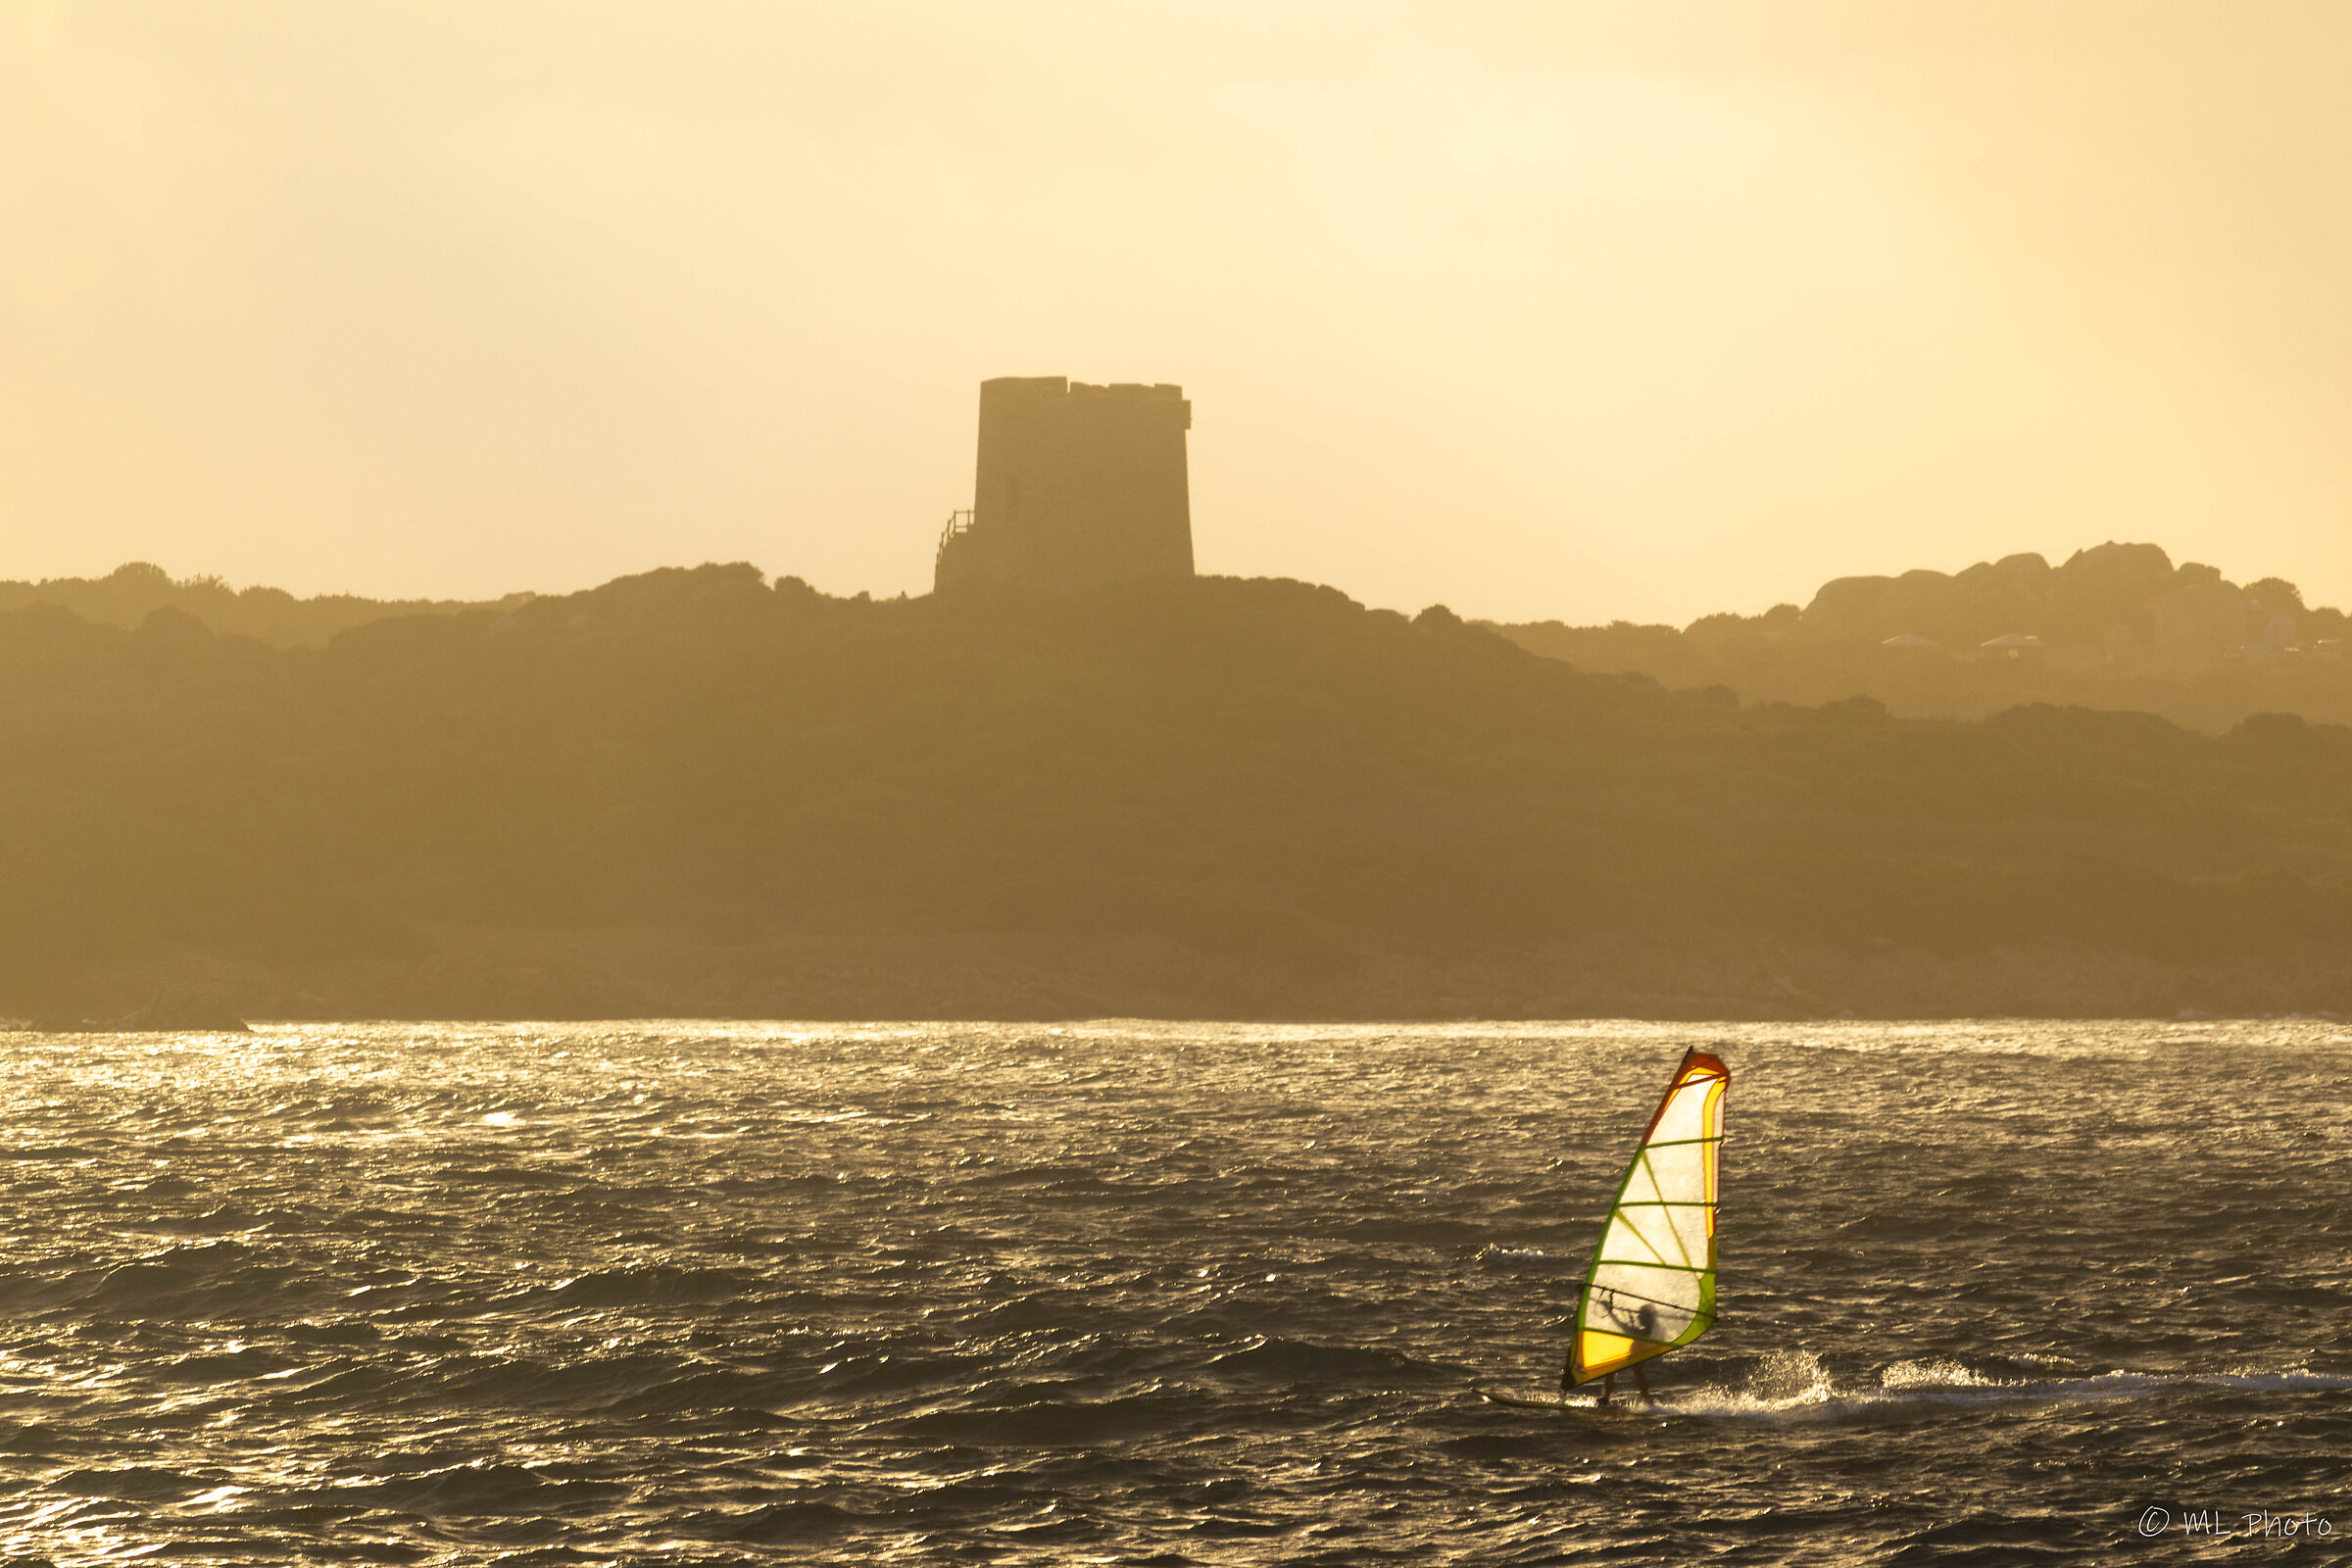 windsurfing into sunset...